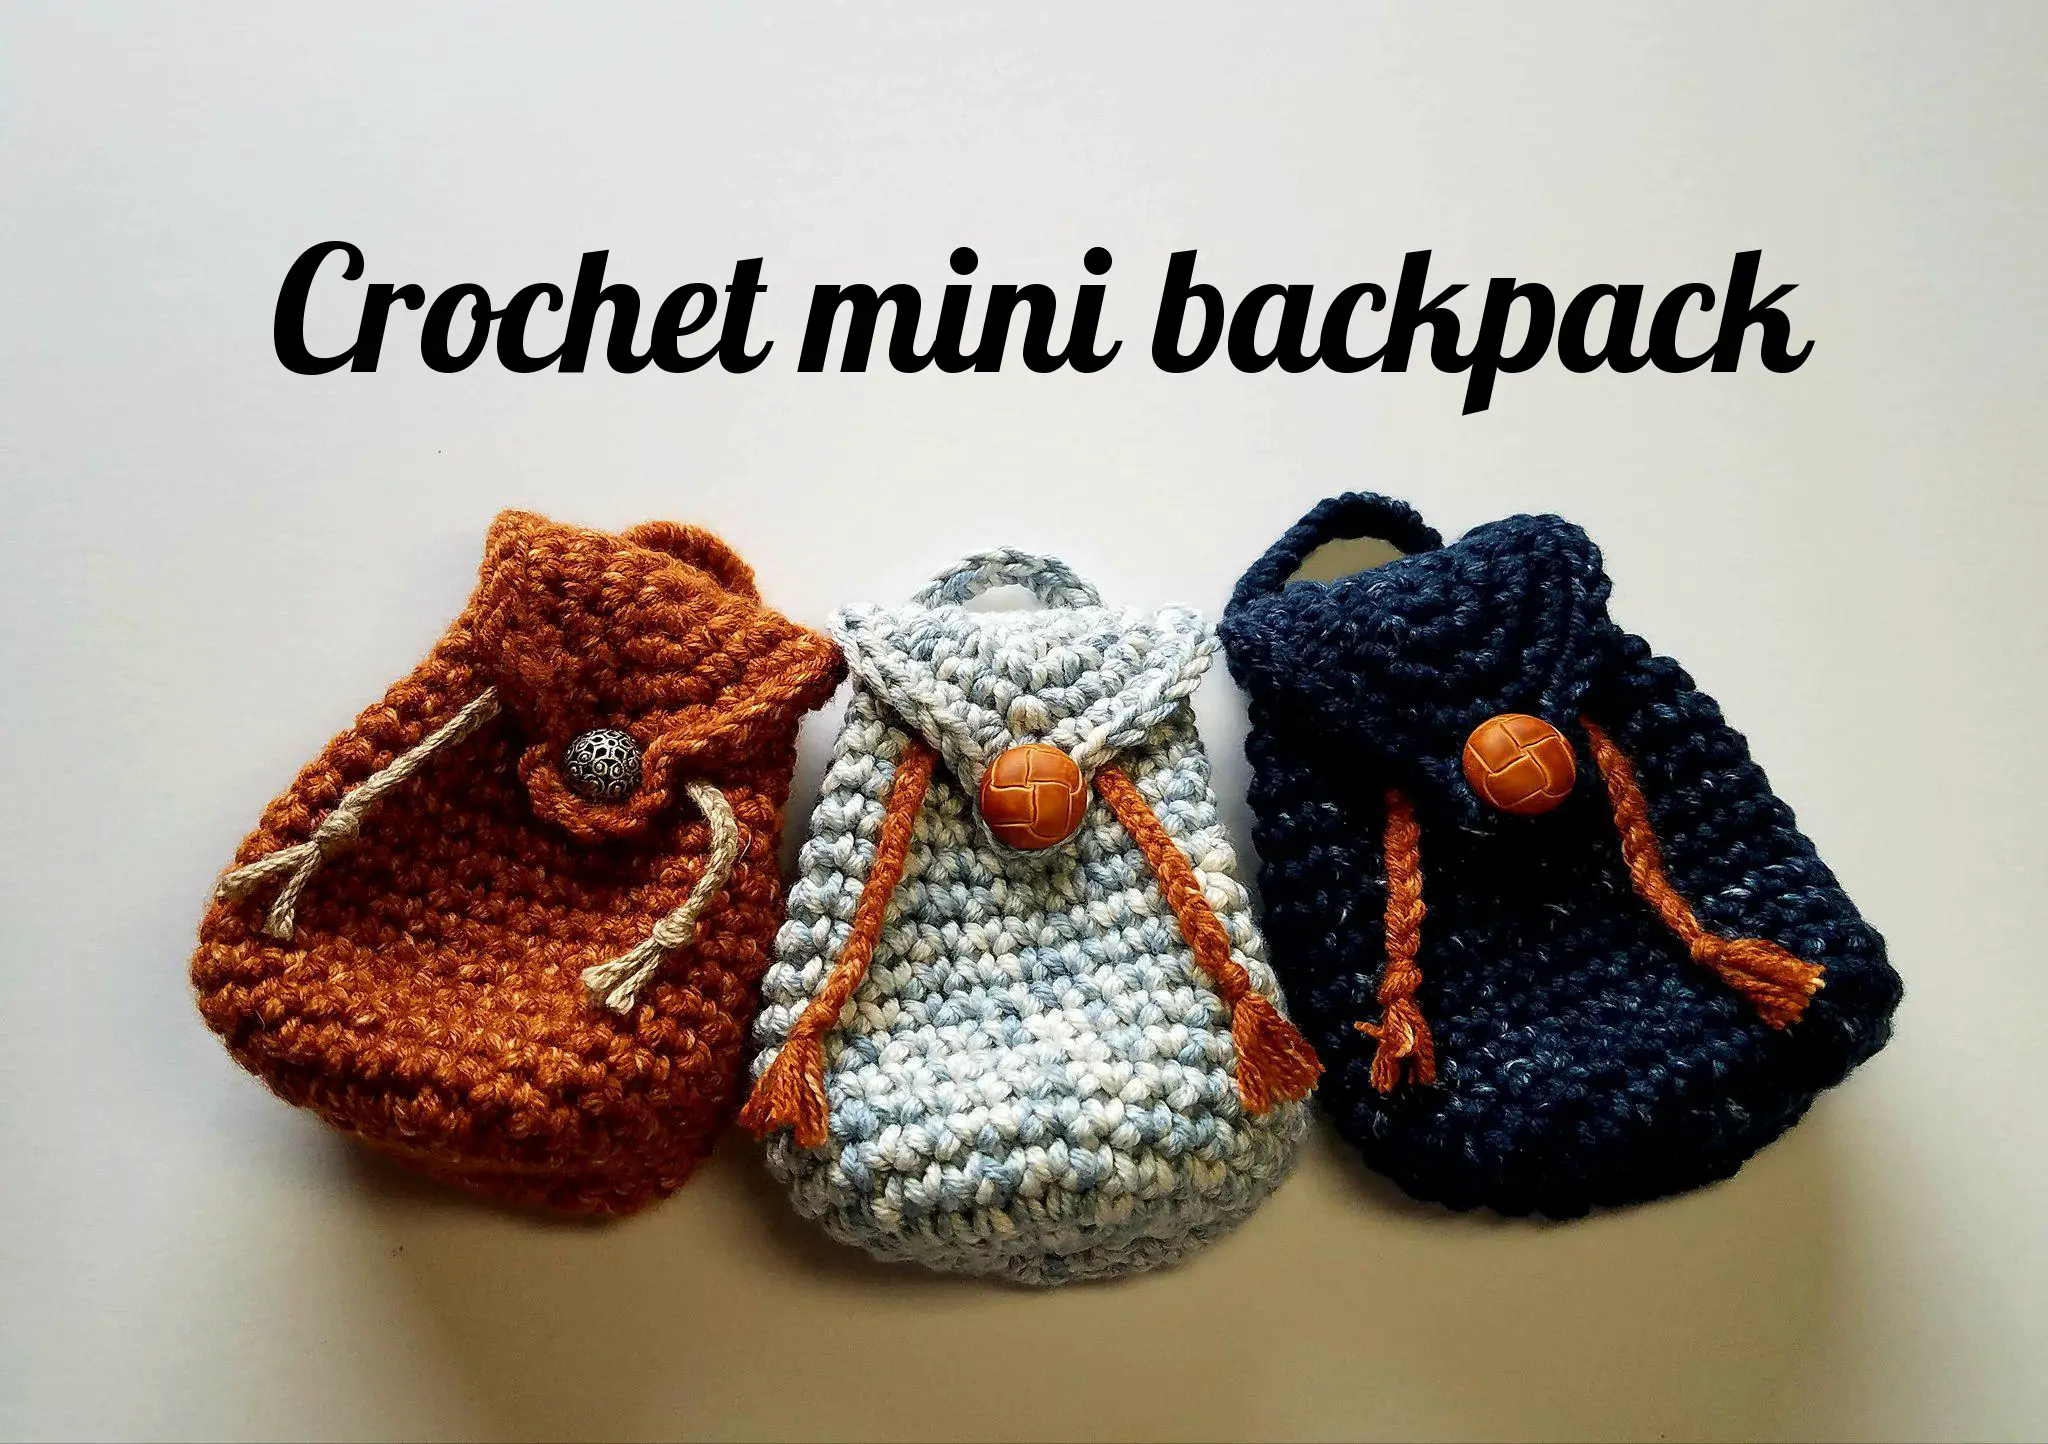 Crochet a Mini Backpack: A Step-by-Step Guide